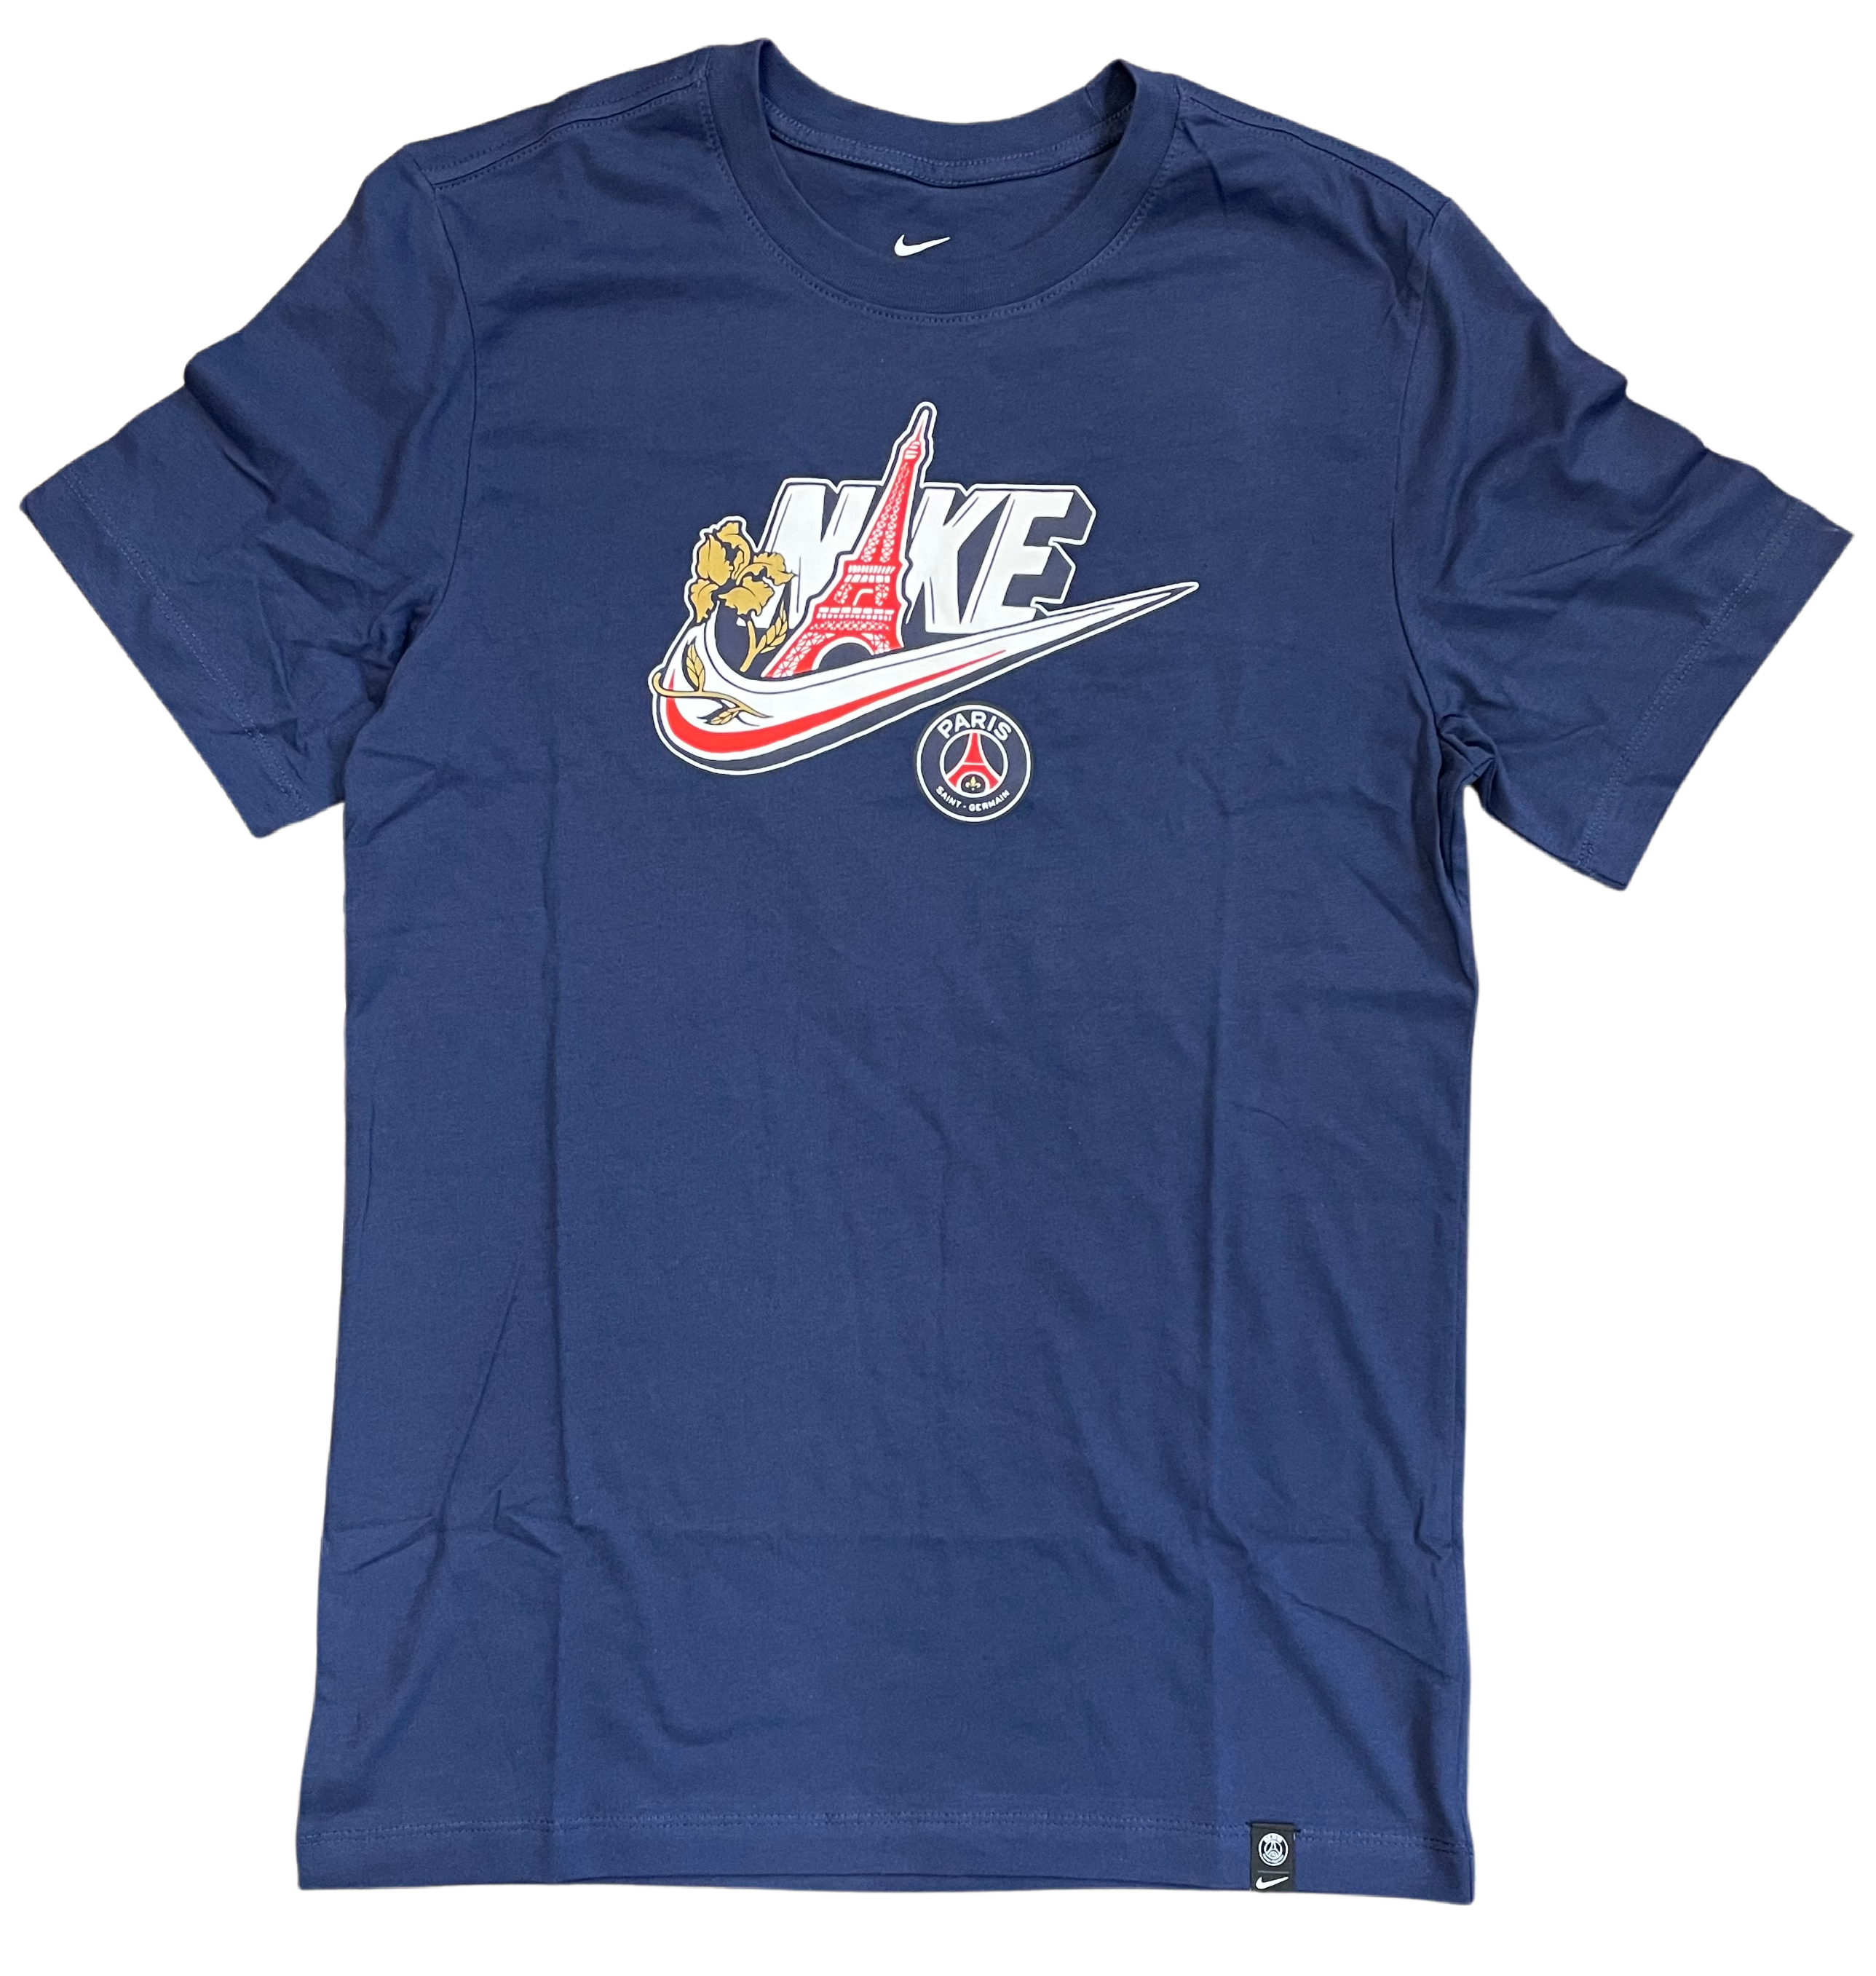 Nike Men's Paris Saint-Germain Futura T-Shirt-Navy